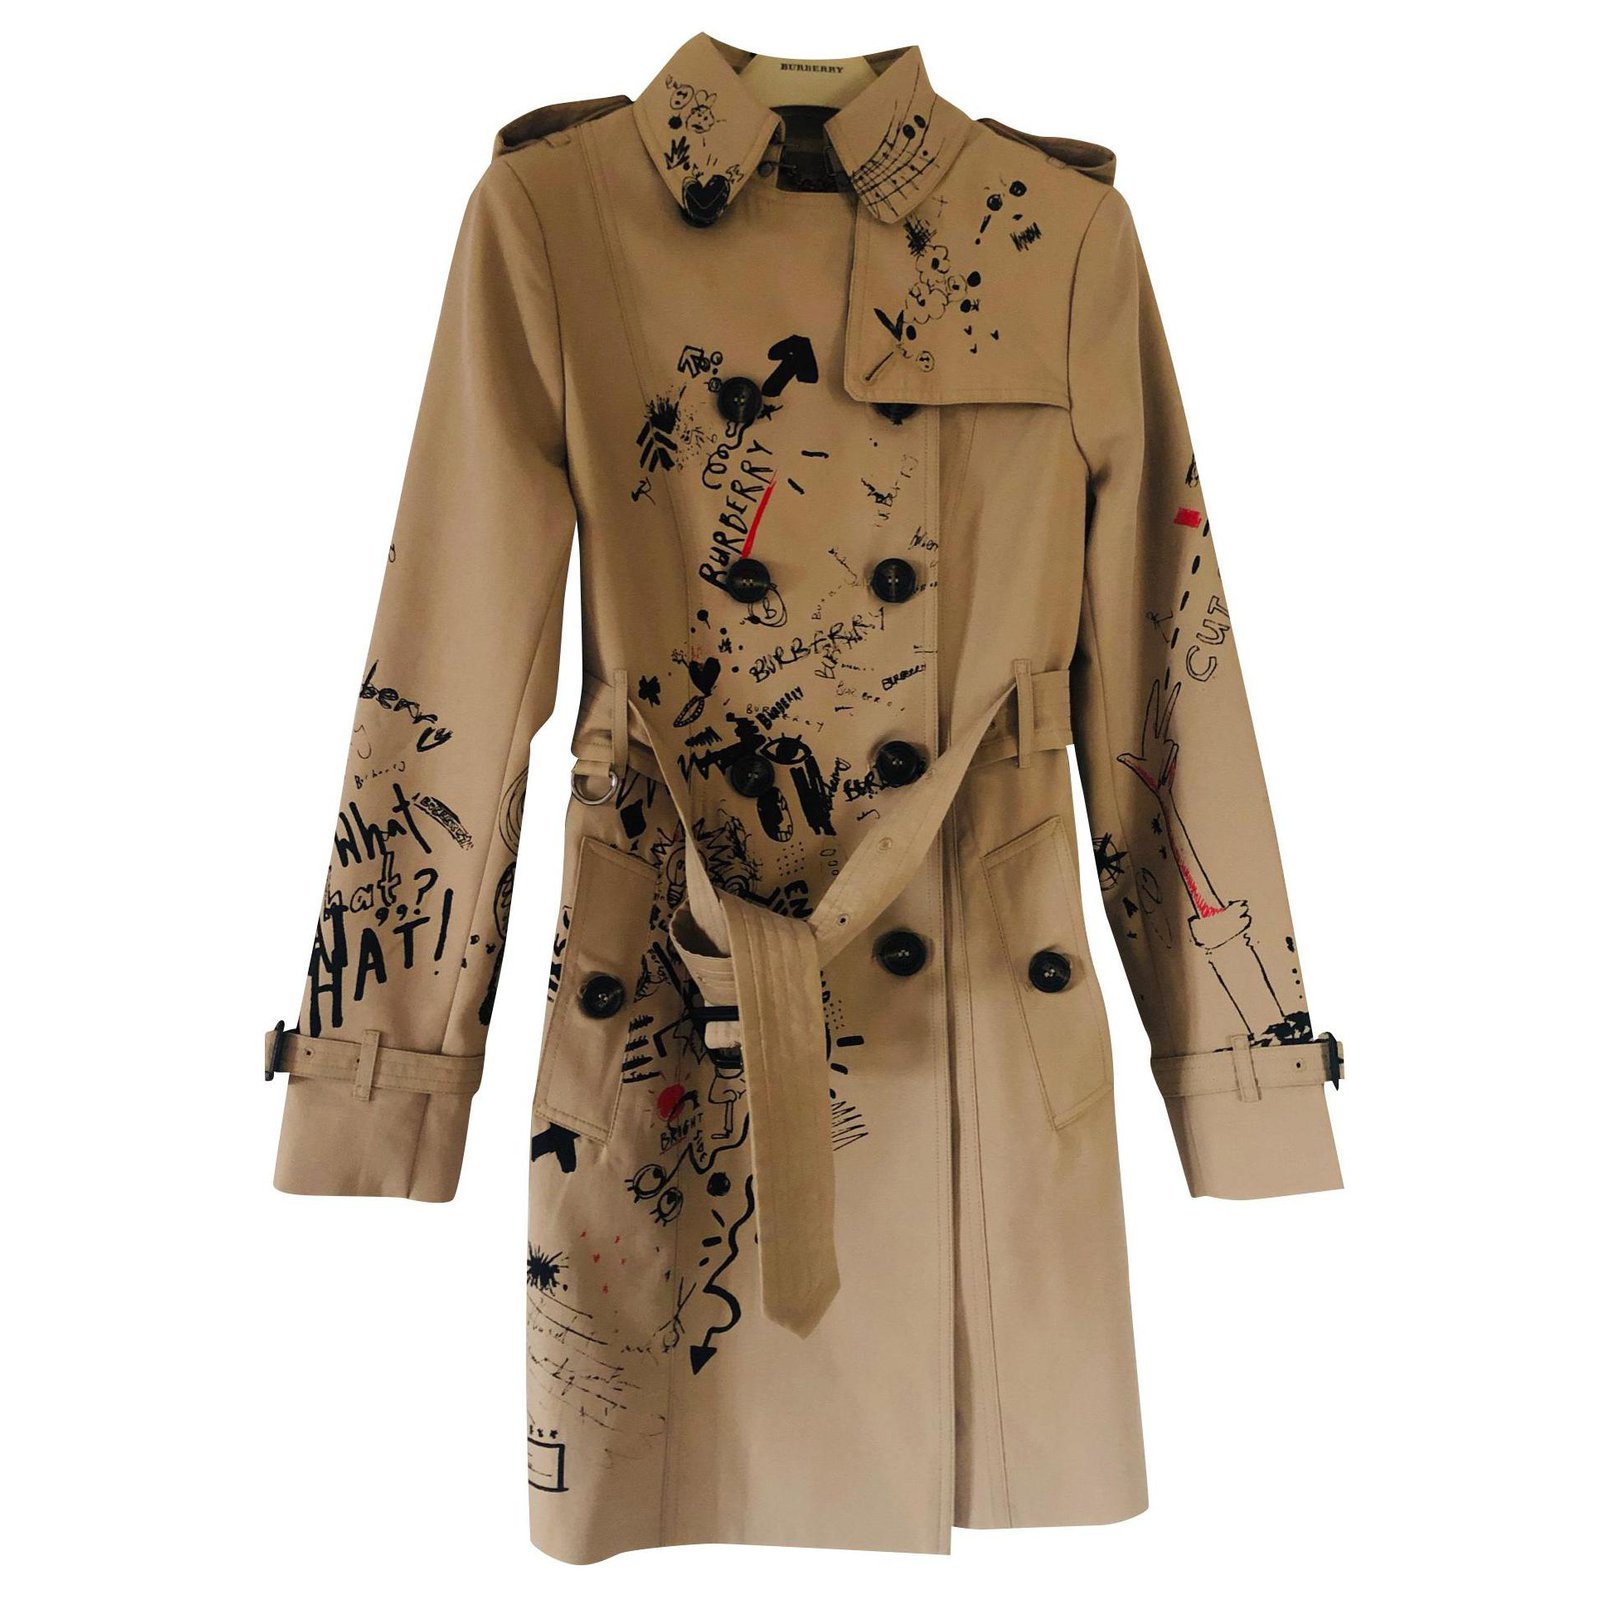 burberry trench coat 2019